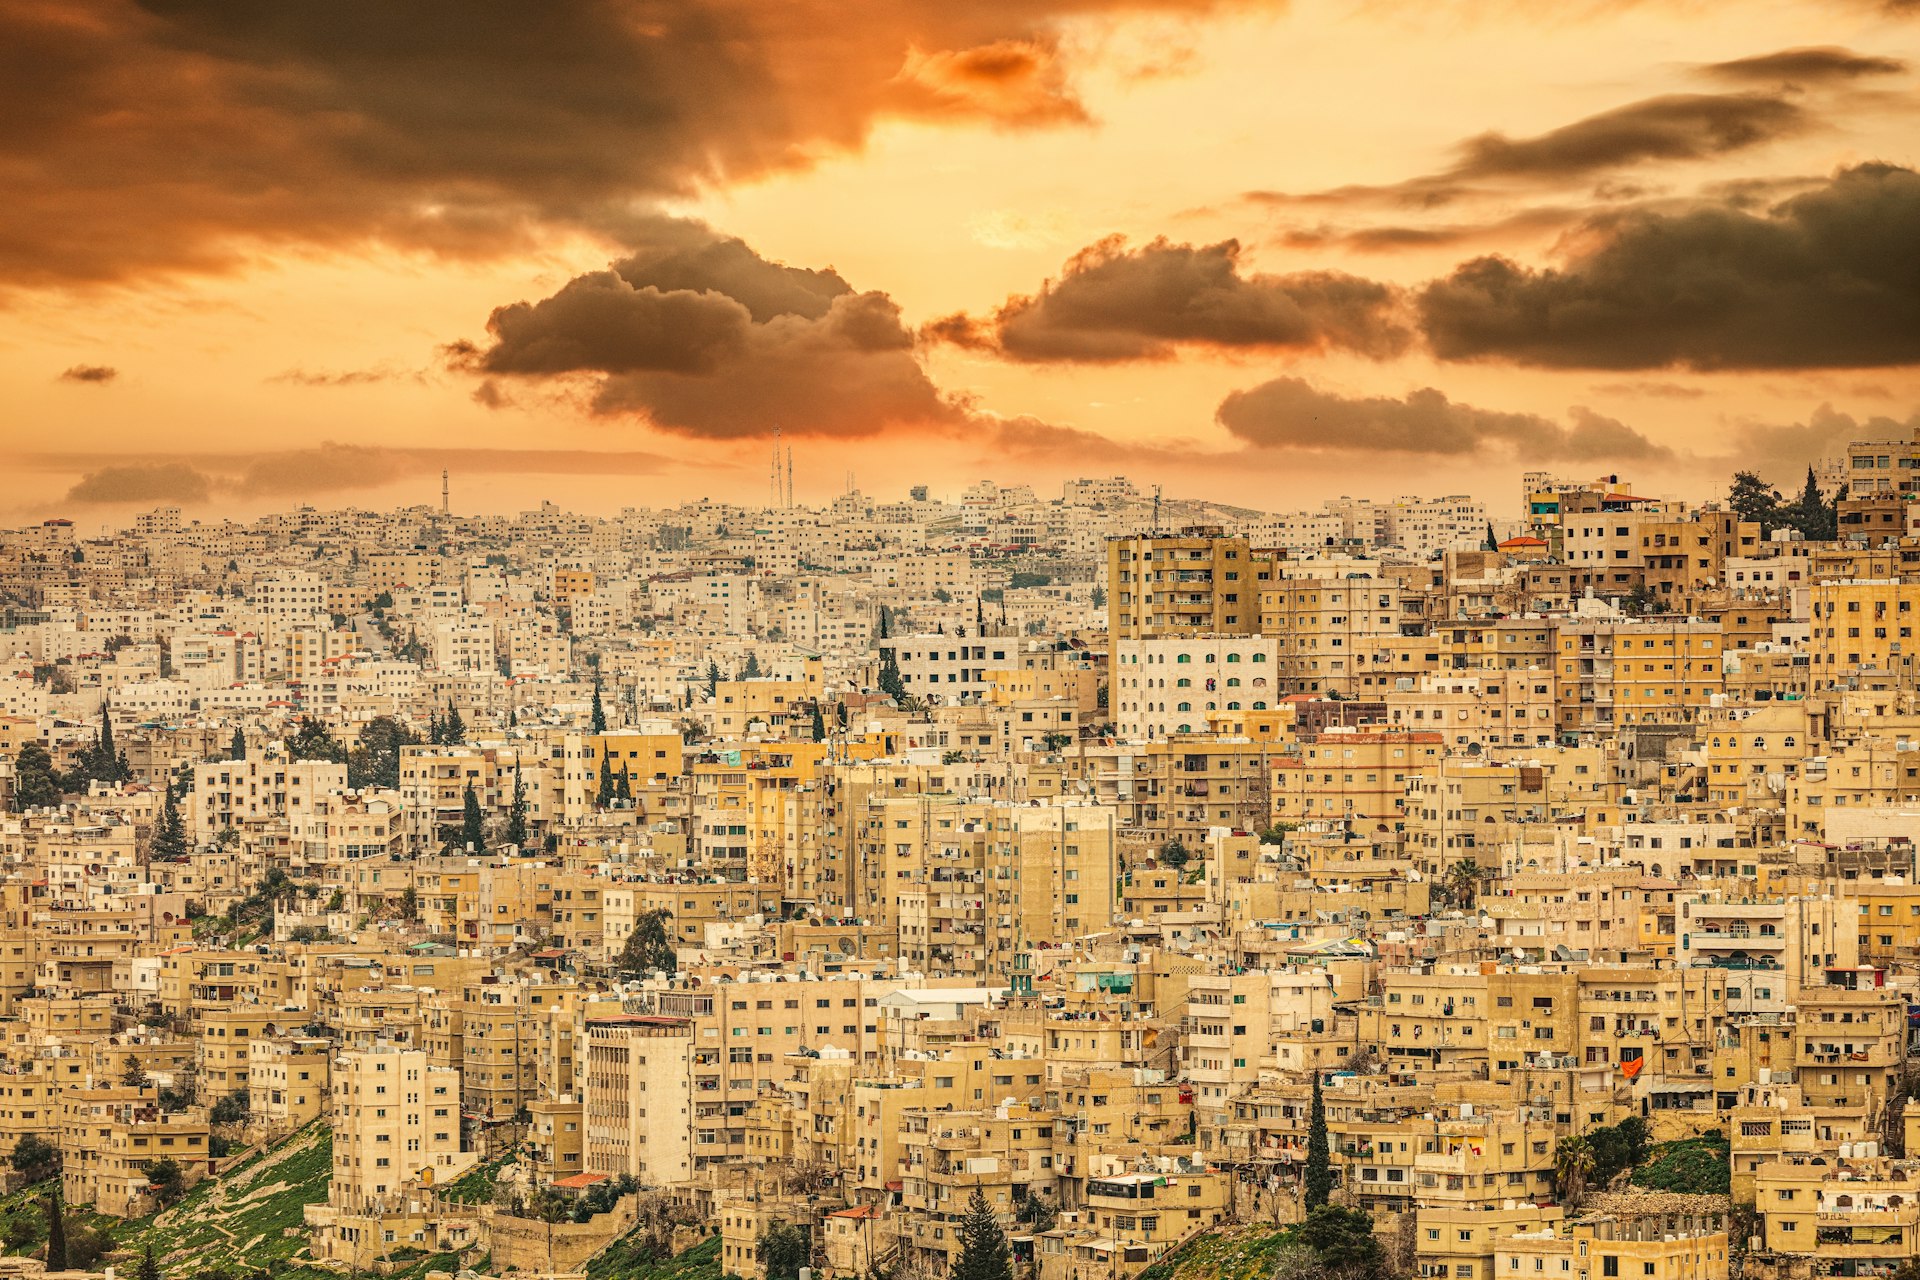 A wide view of dense apartment blocks on a hillside in Amman, Jordan, at sunset